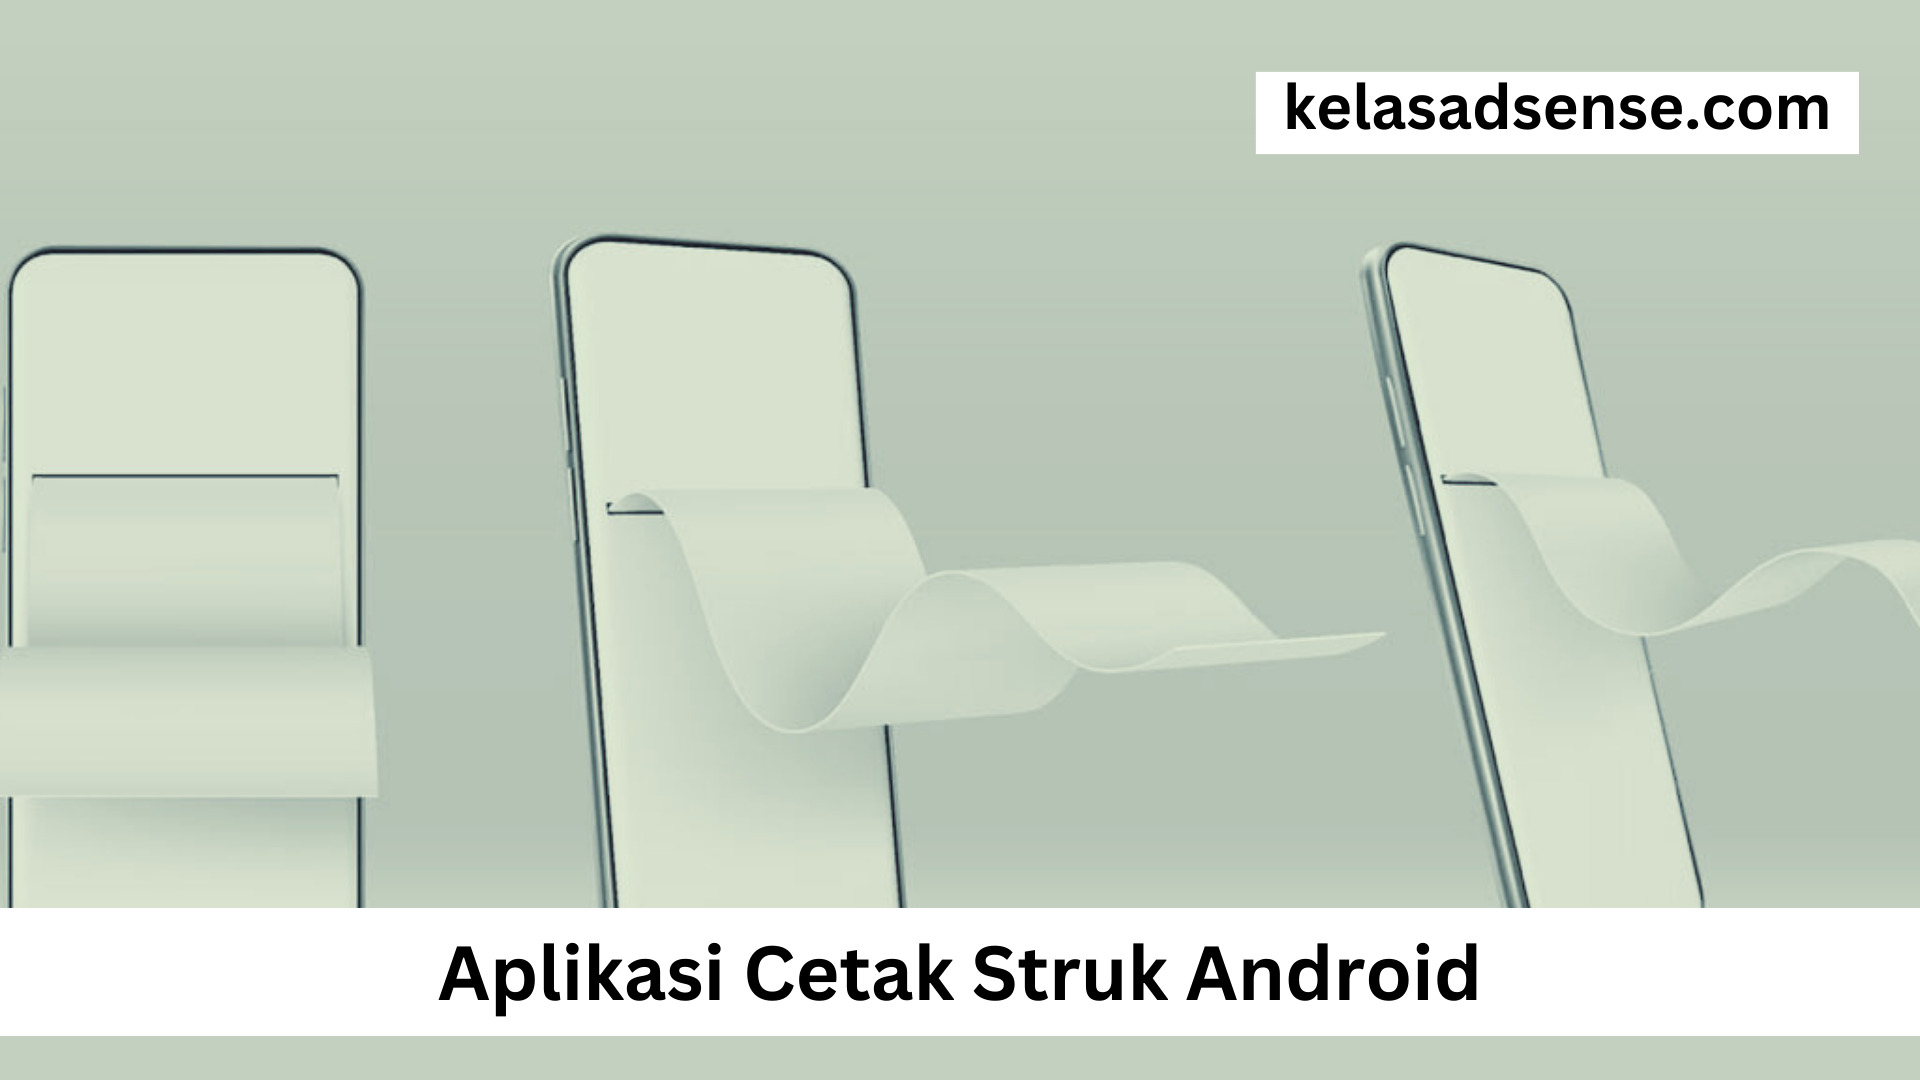 Aplikasi Cetak Struk Android